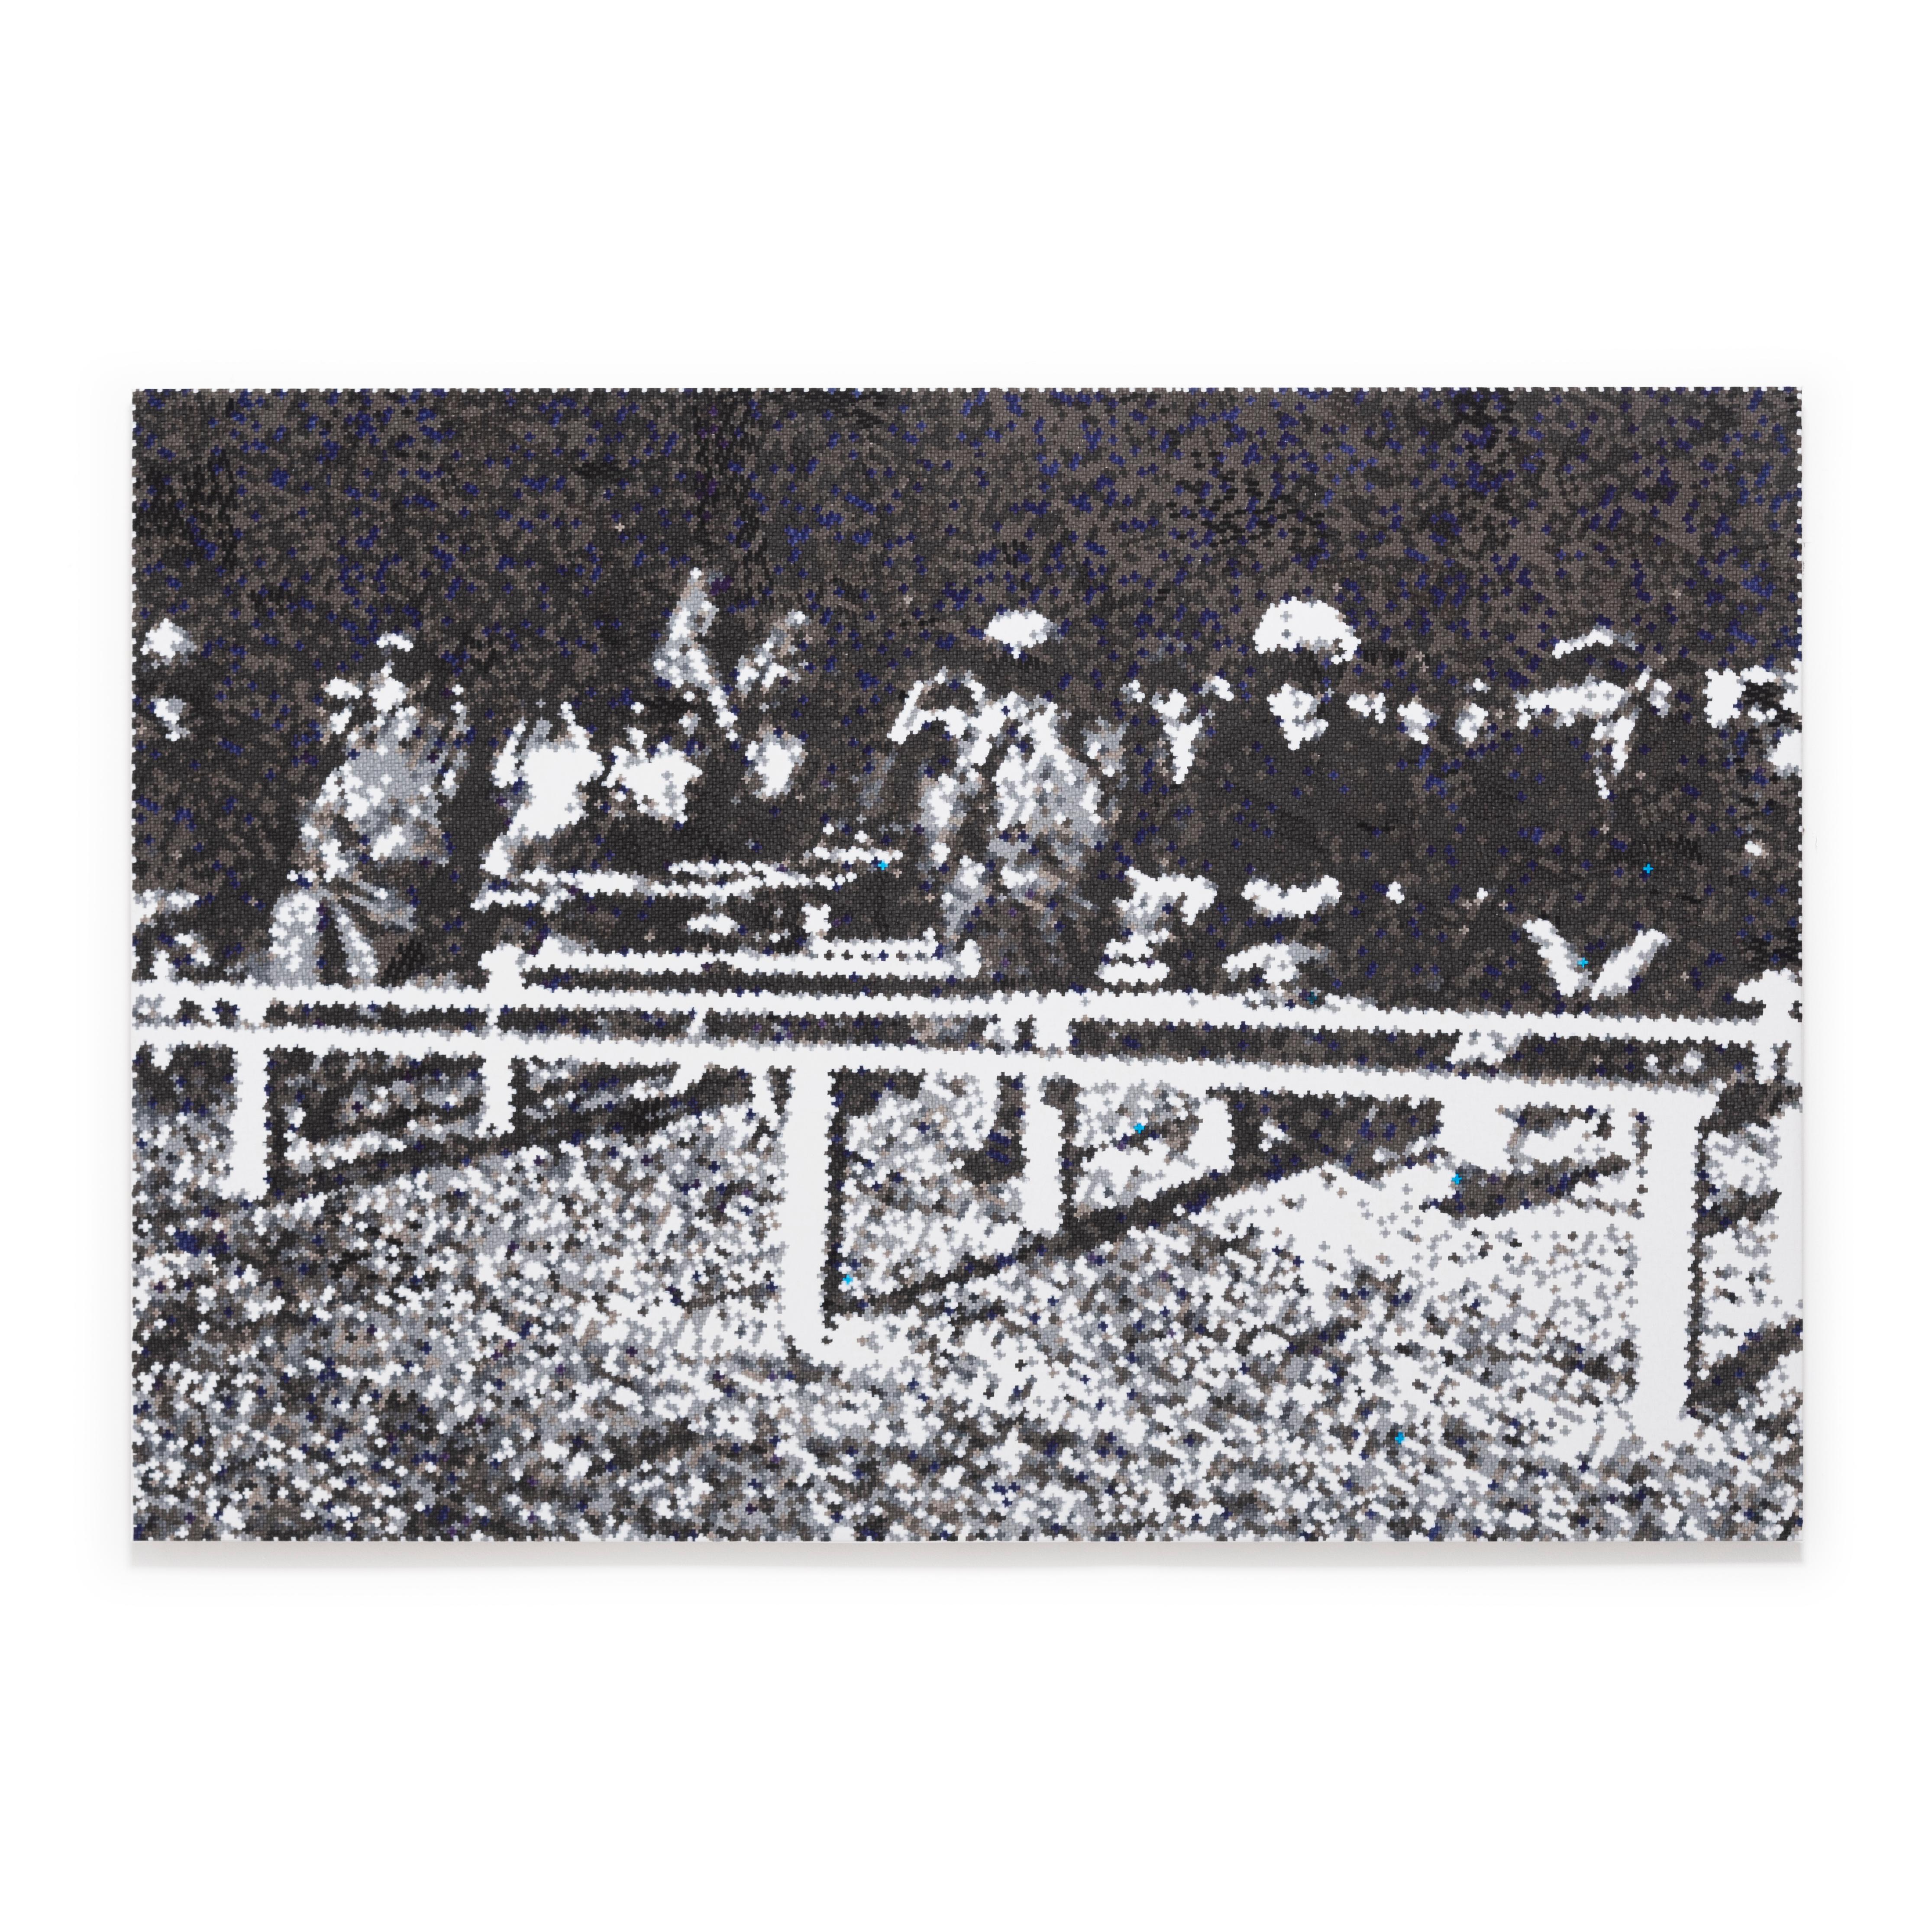 Operation Plumbbob-Boltzmann, Pixelated Declassified Military Image, Framed - Painting by Jan Pieter Fokkens